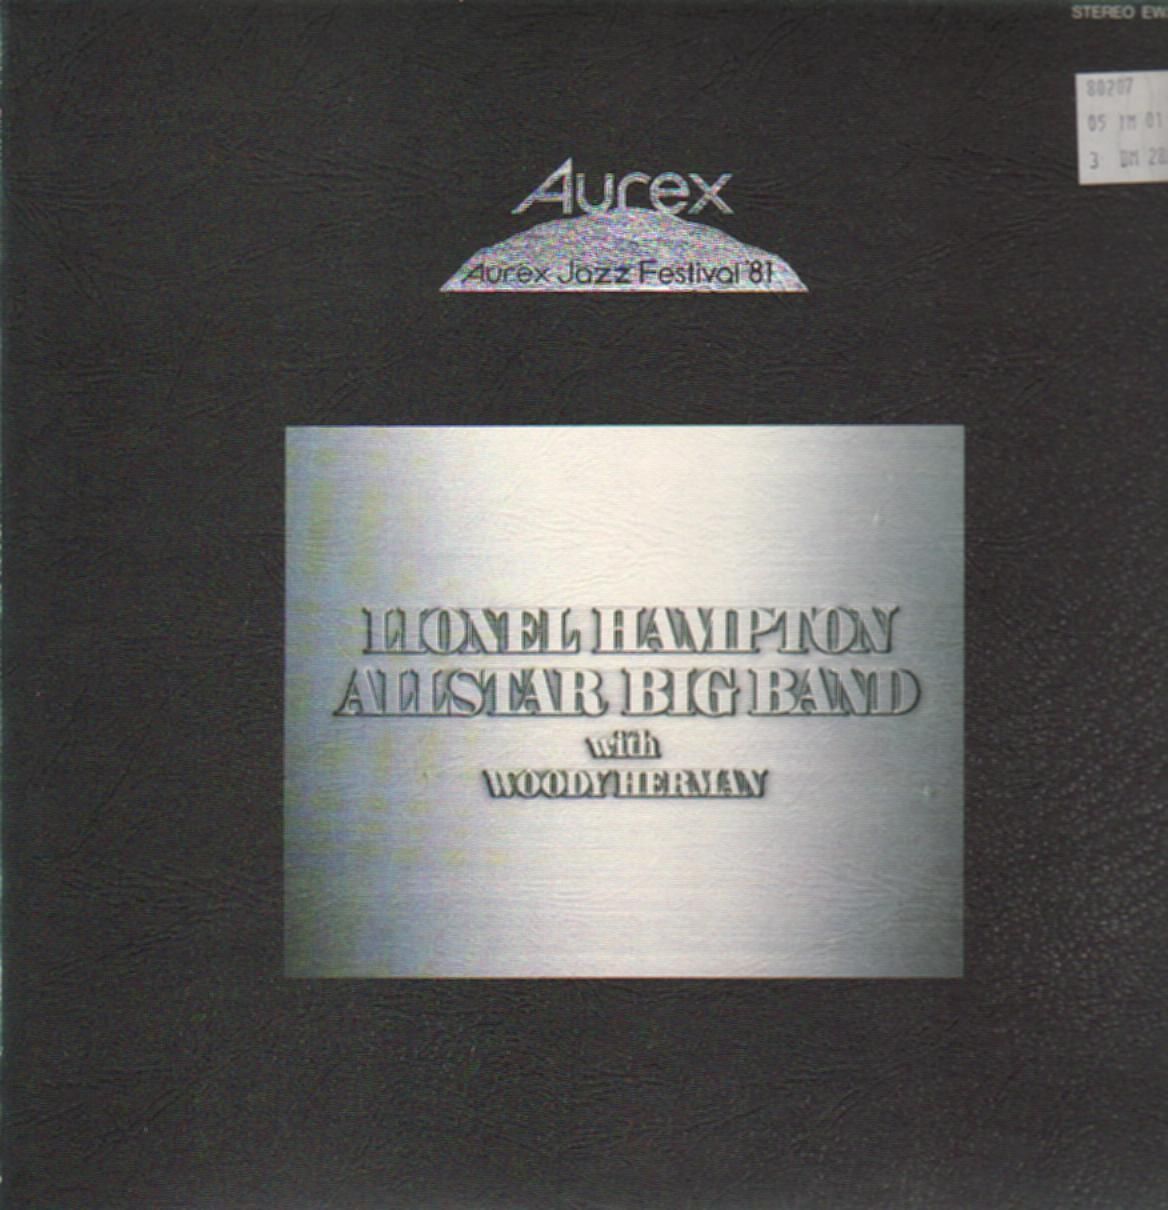 LIONEL HAMPTON - Lionel Hampton Allstar Big Band, Woody Herman,Aurex Jazz Festival '81 cover 